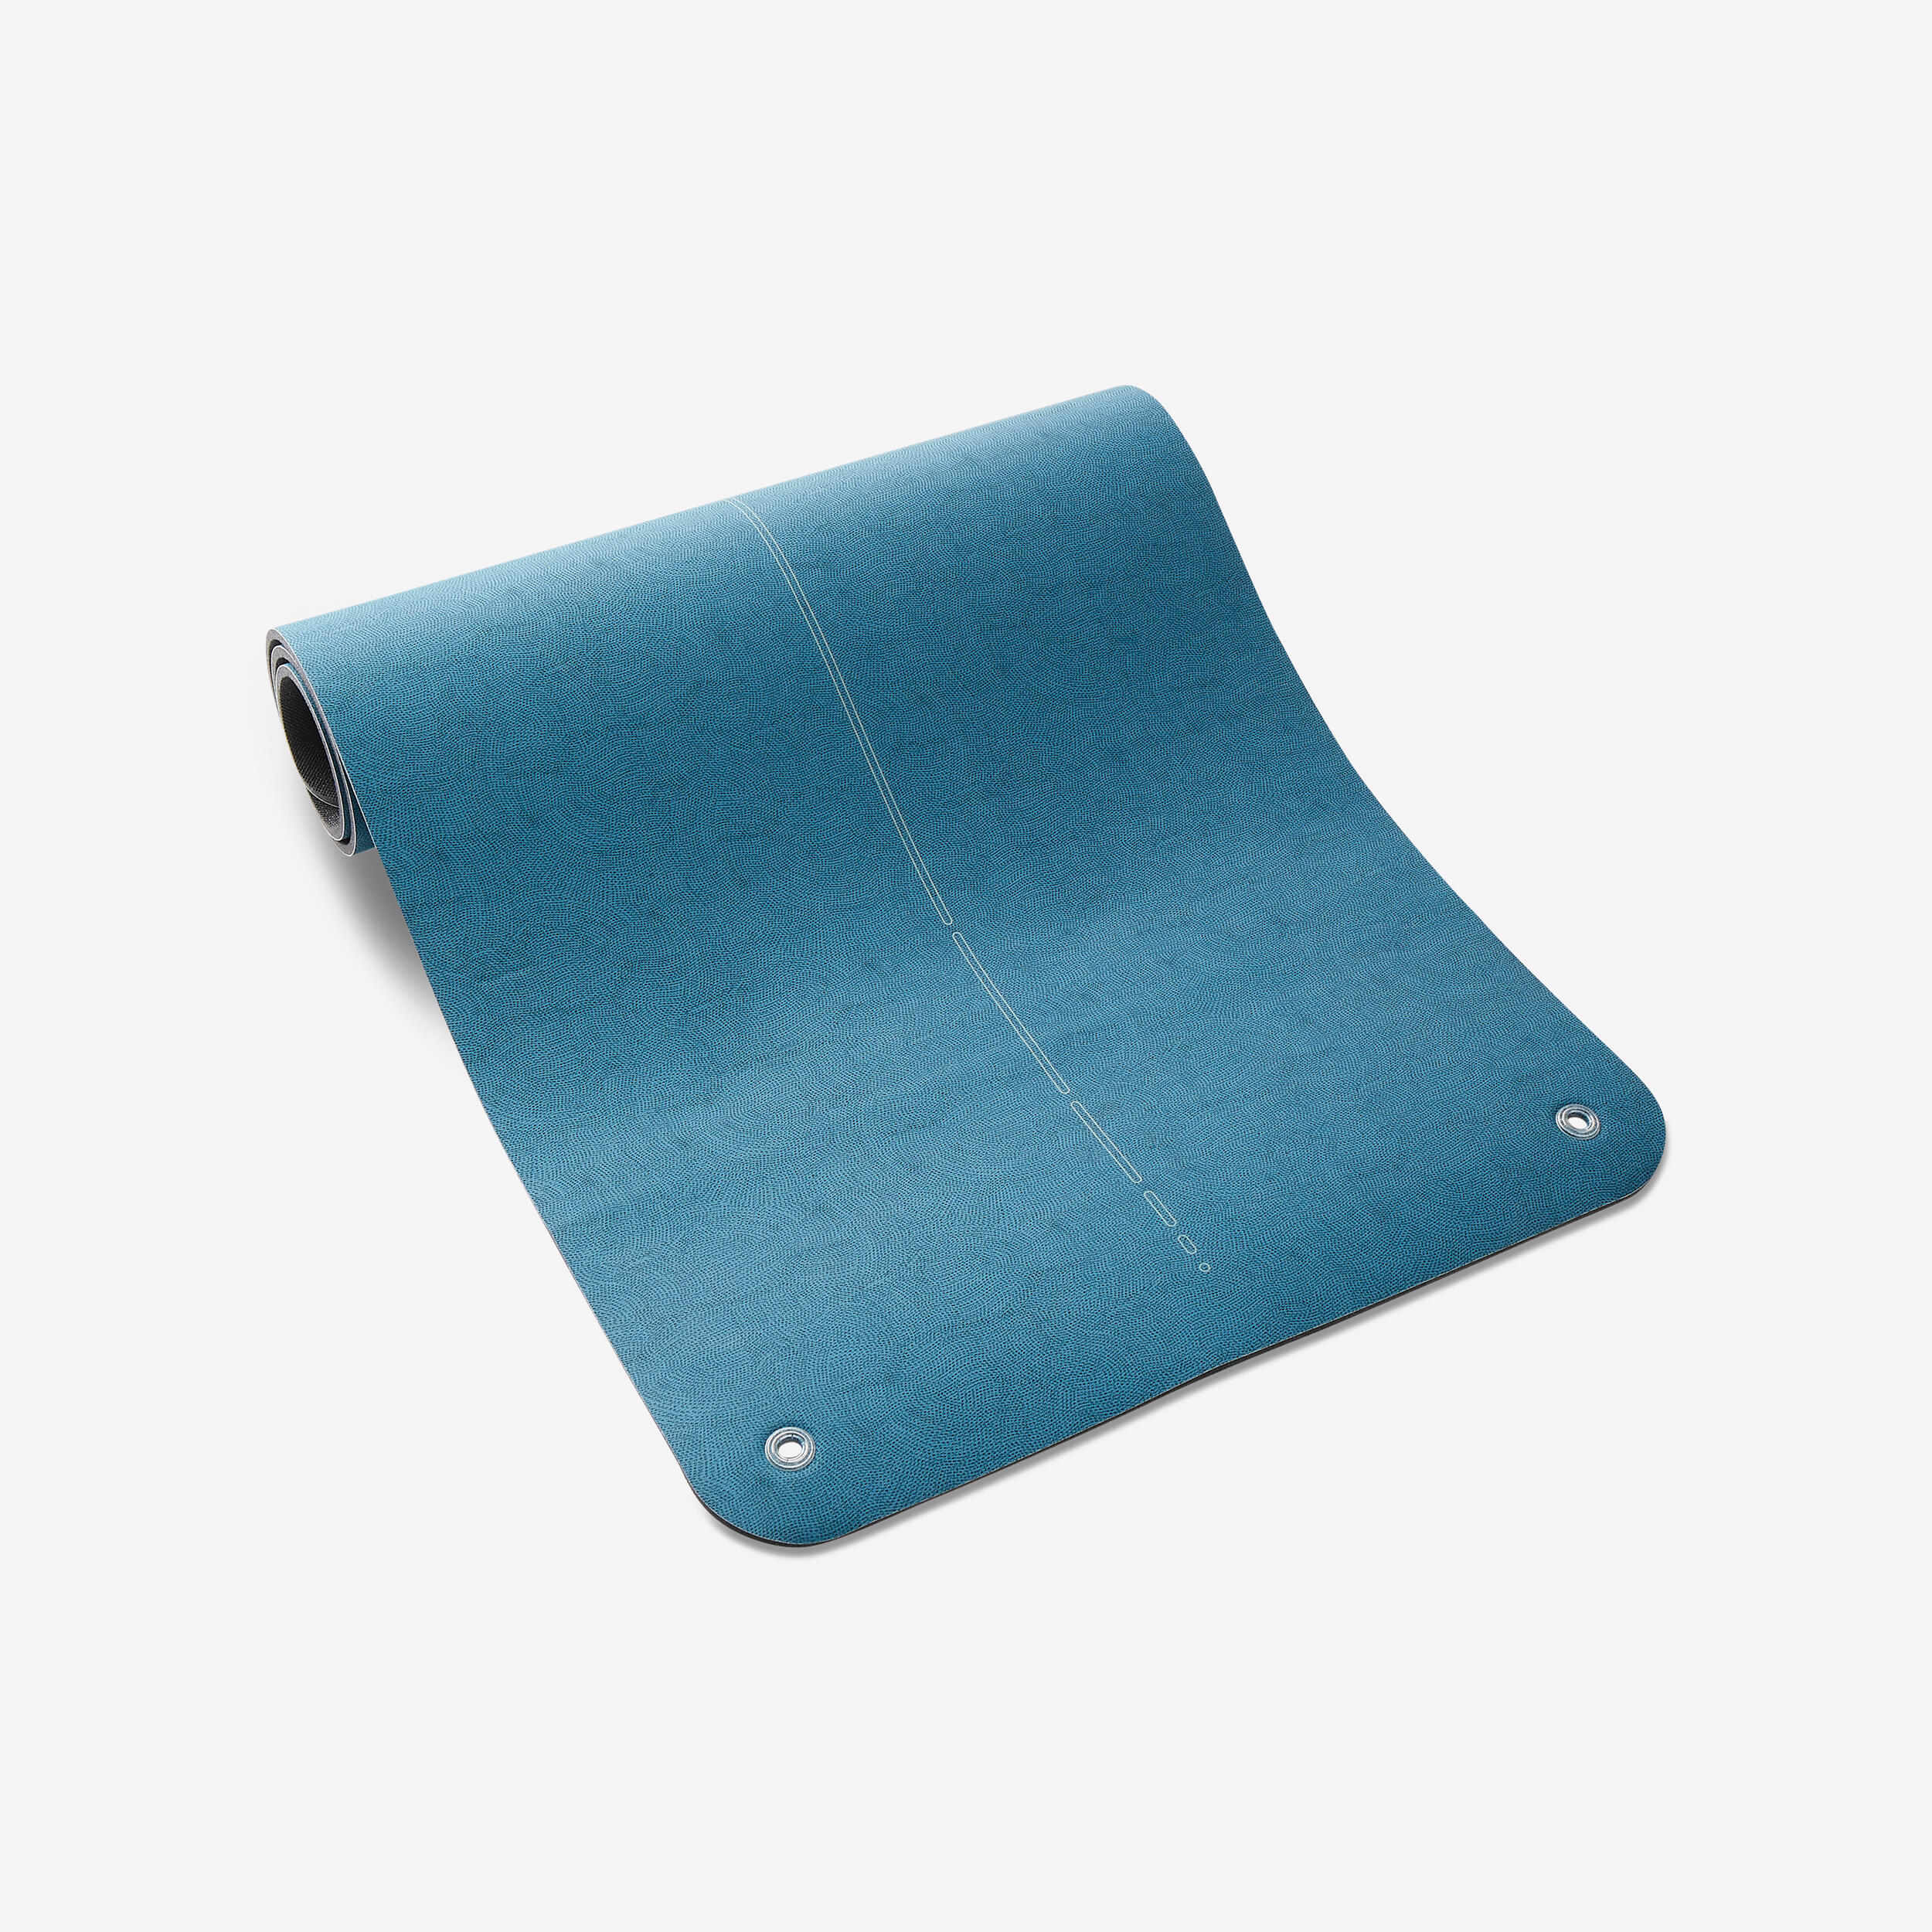 Gym Mat - 170 x 62 x 0.8 cm Turquoise Print - No Size By DOMYOS | Decathlon